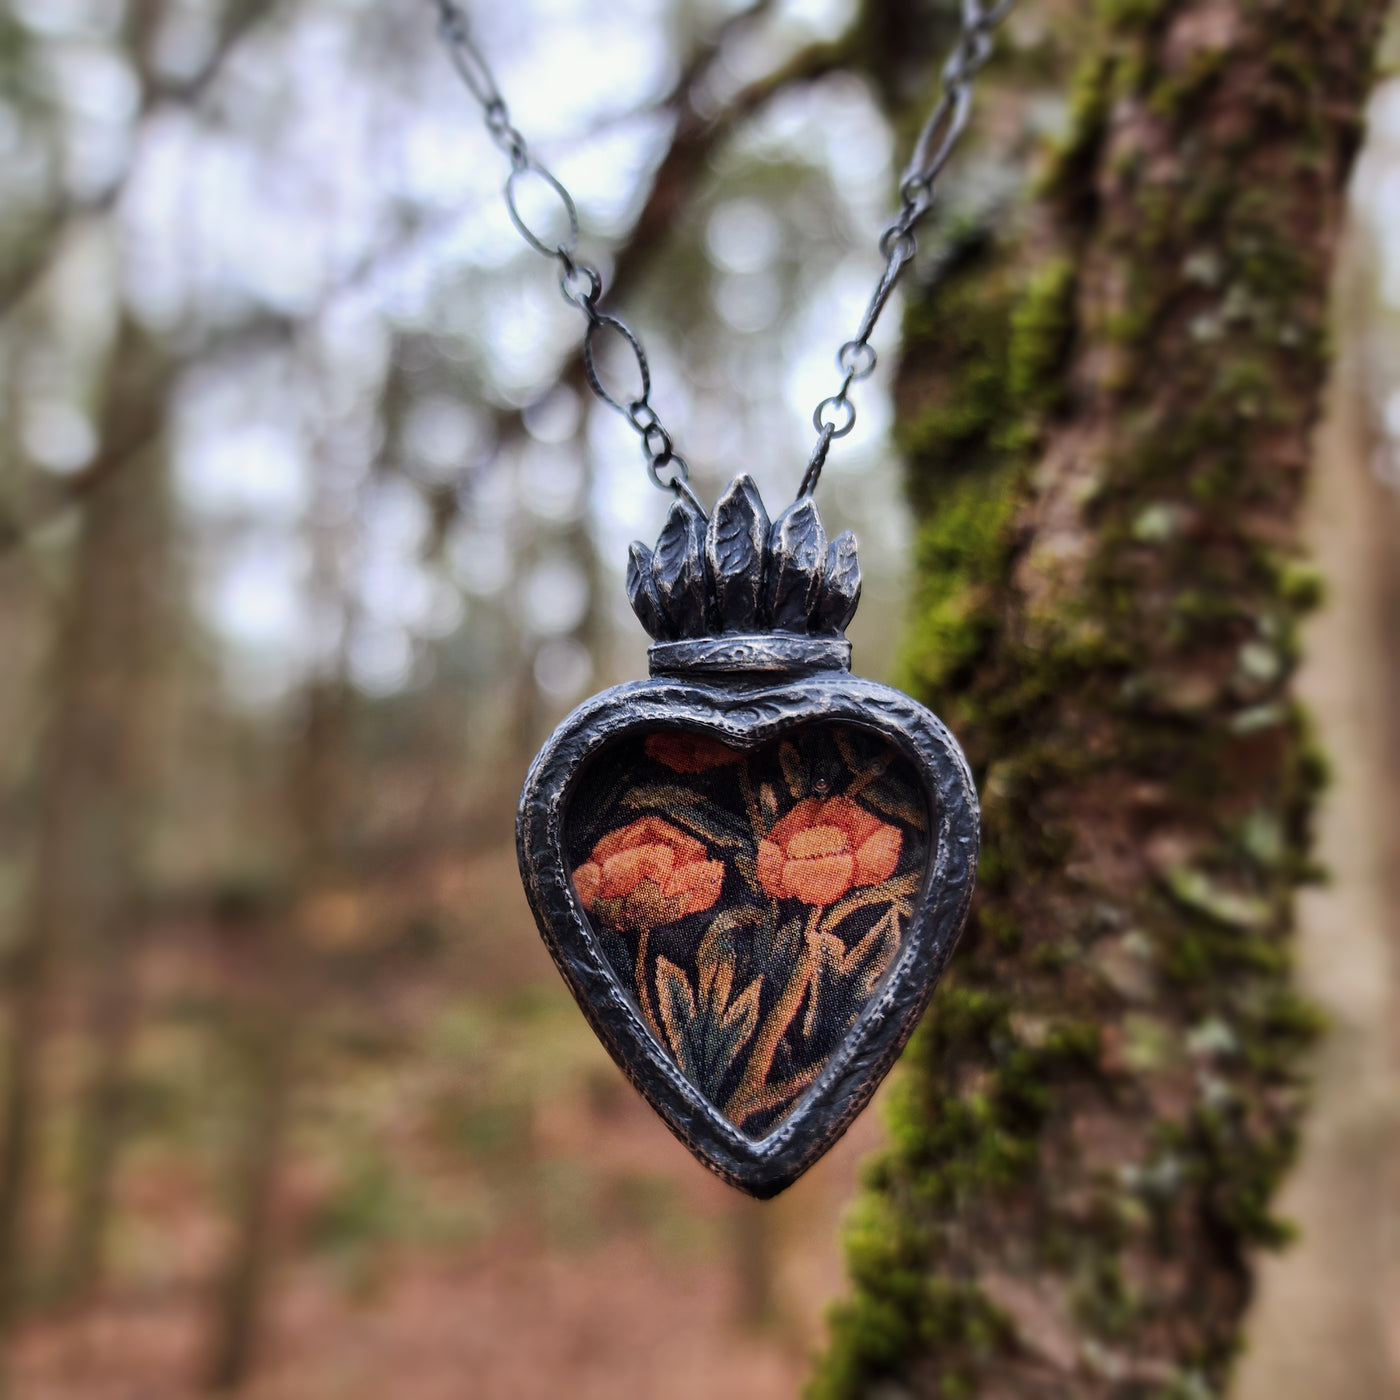 geminae rosae - sacred heart amulet